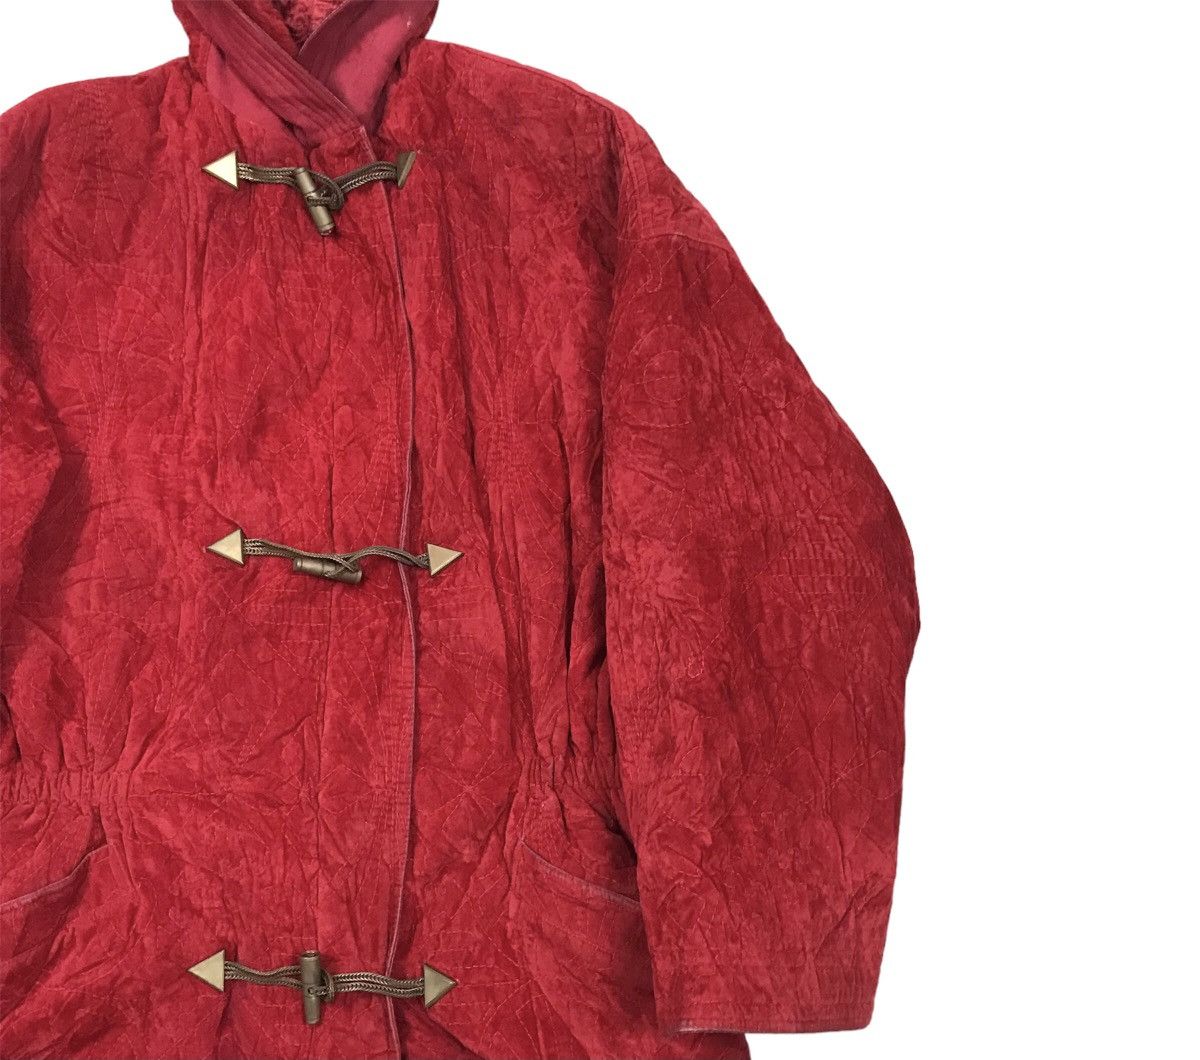 Versace Vintage Gianni Versace Quilted Suede Duffle Coat Jacket Size US M / EU 48-50 / 2 - 4 Thumbnail